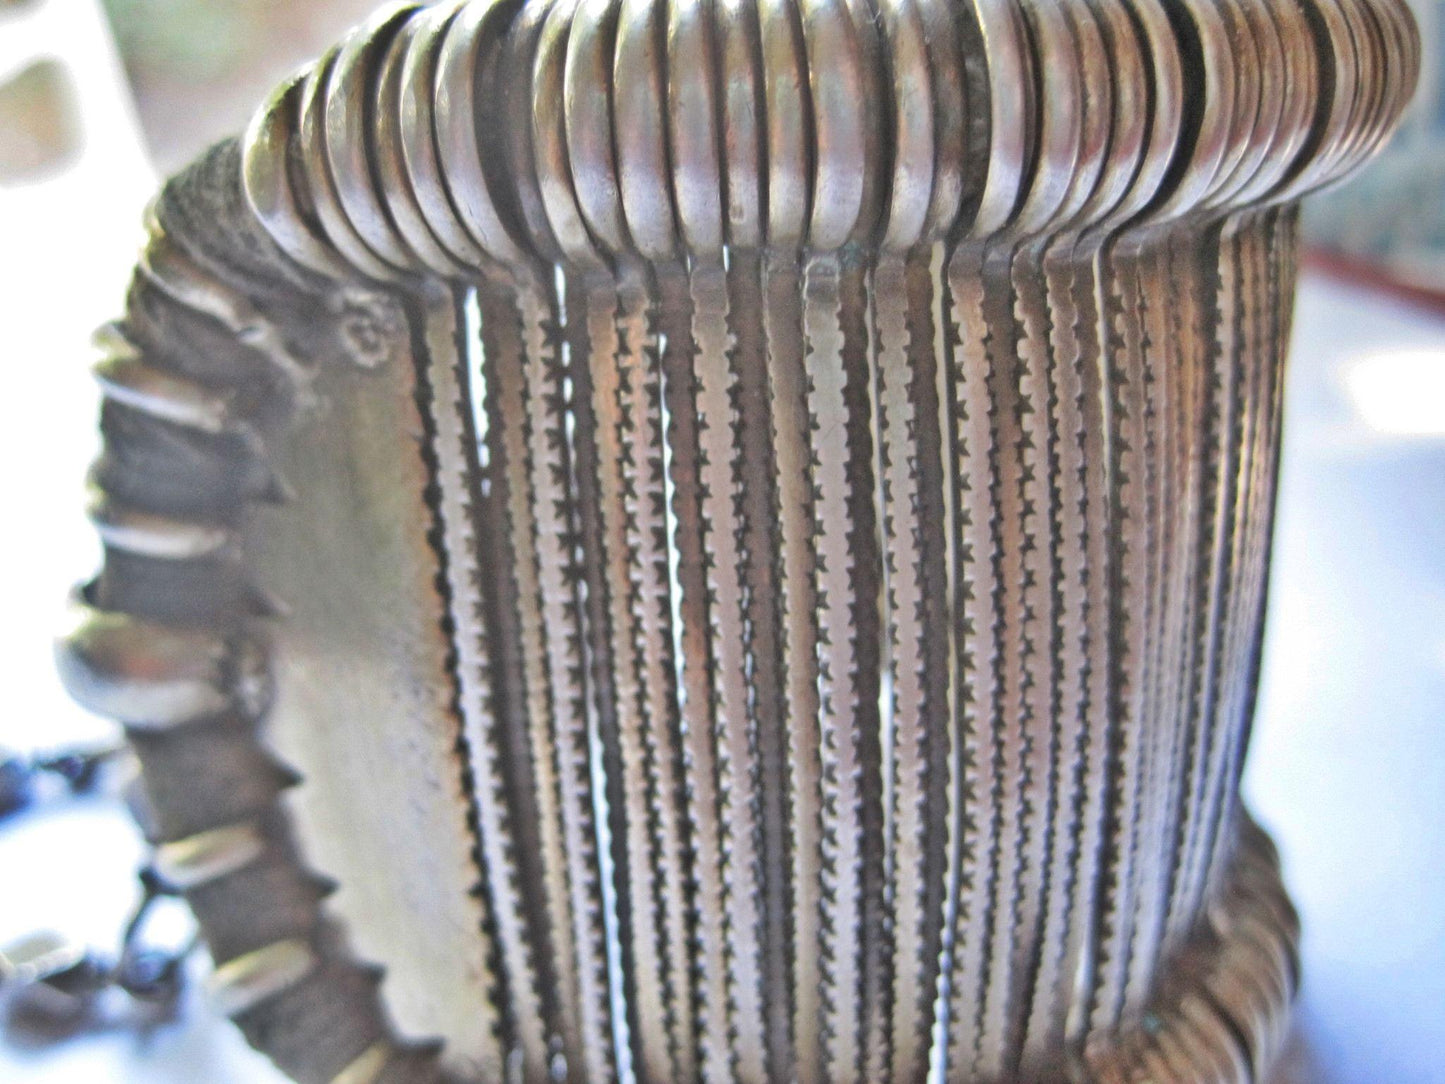 Vintage Tribal Silver Upper Arm Bracelet from Rajasthan, India - Anteeka